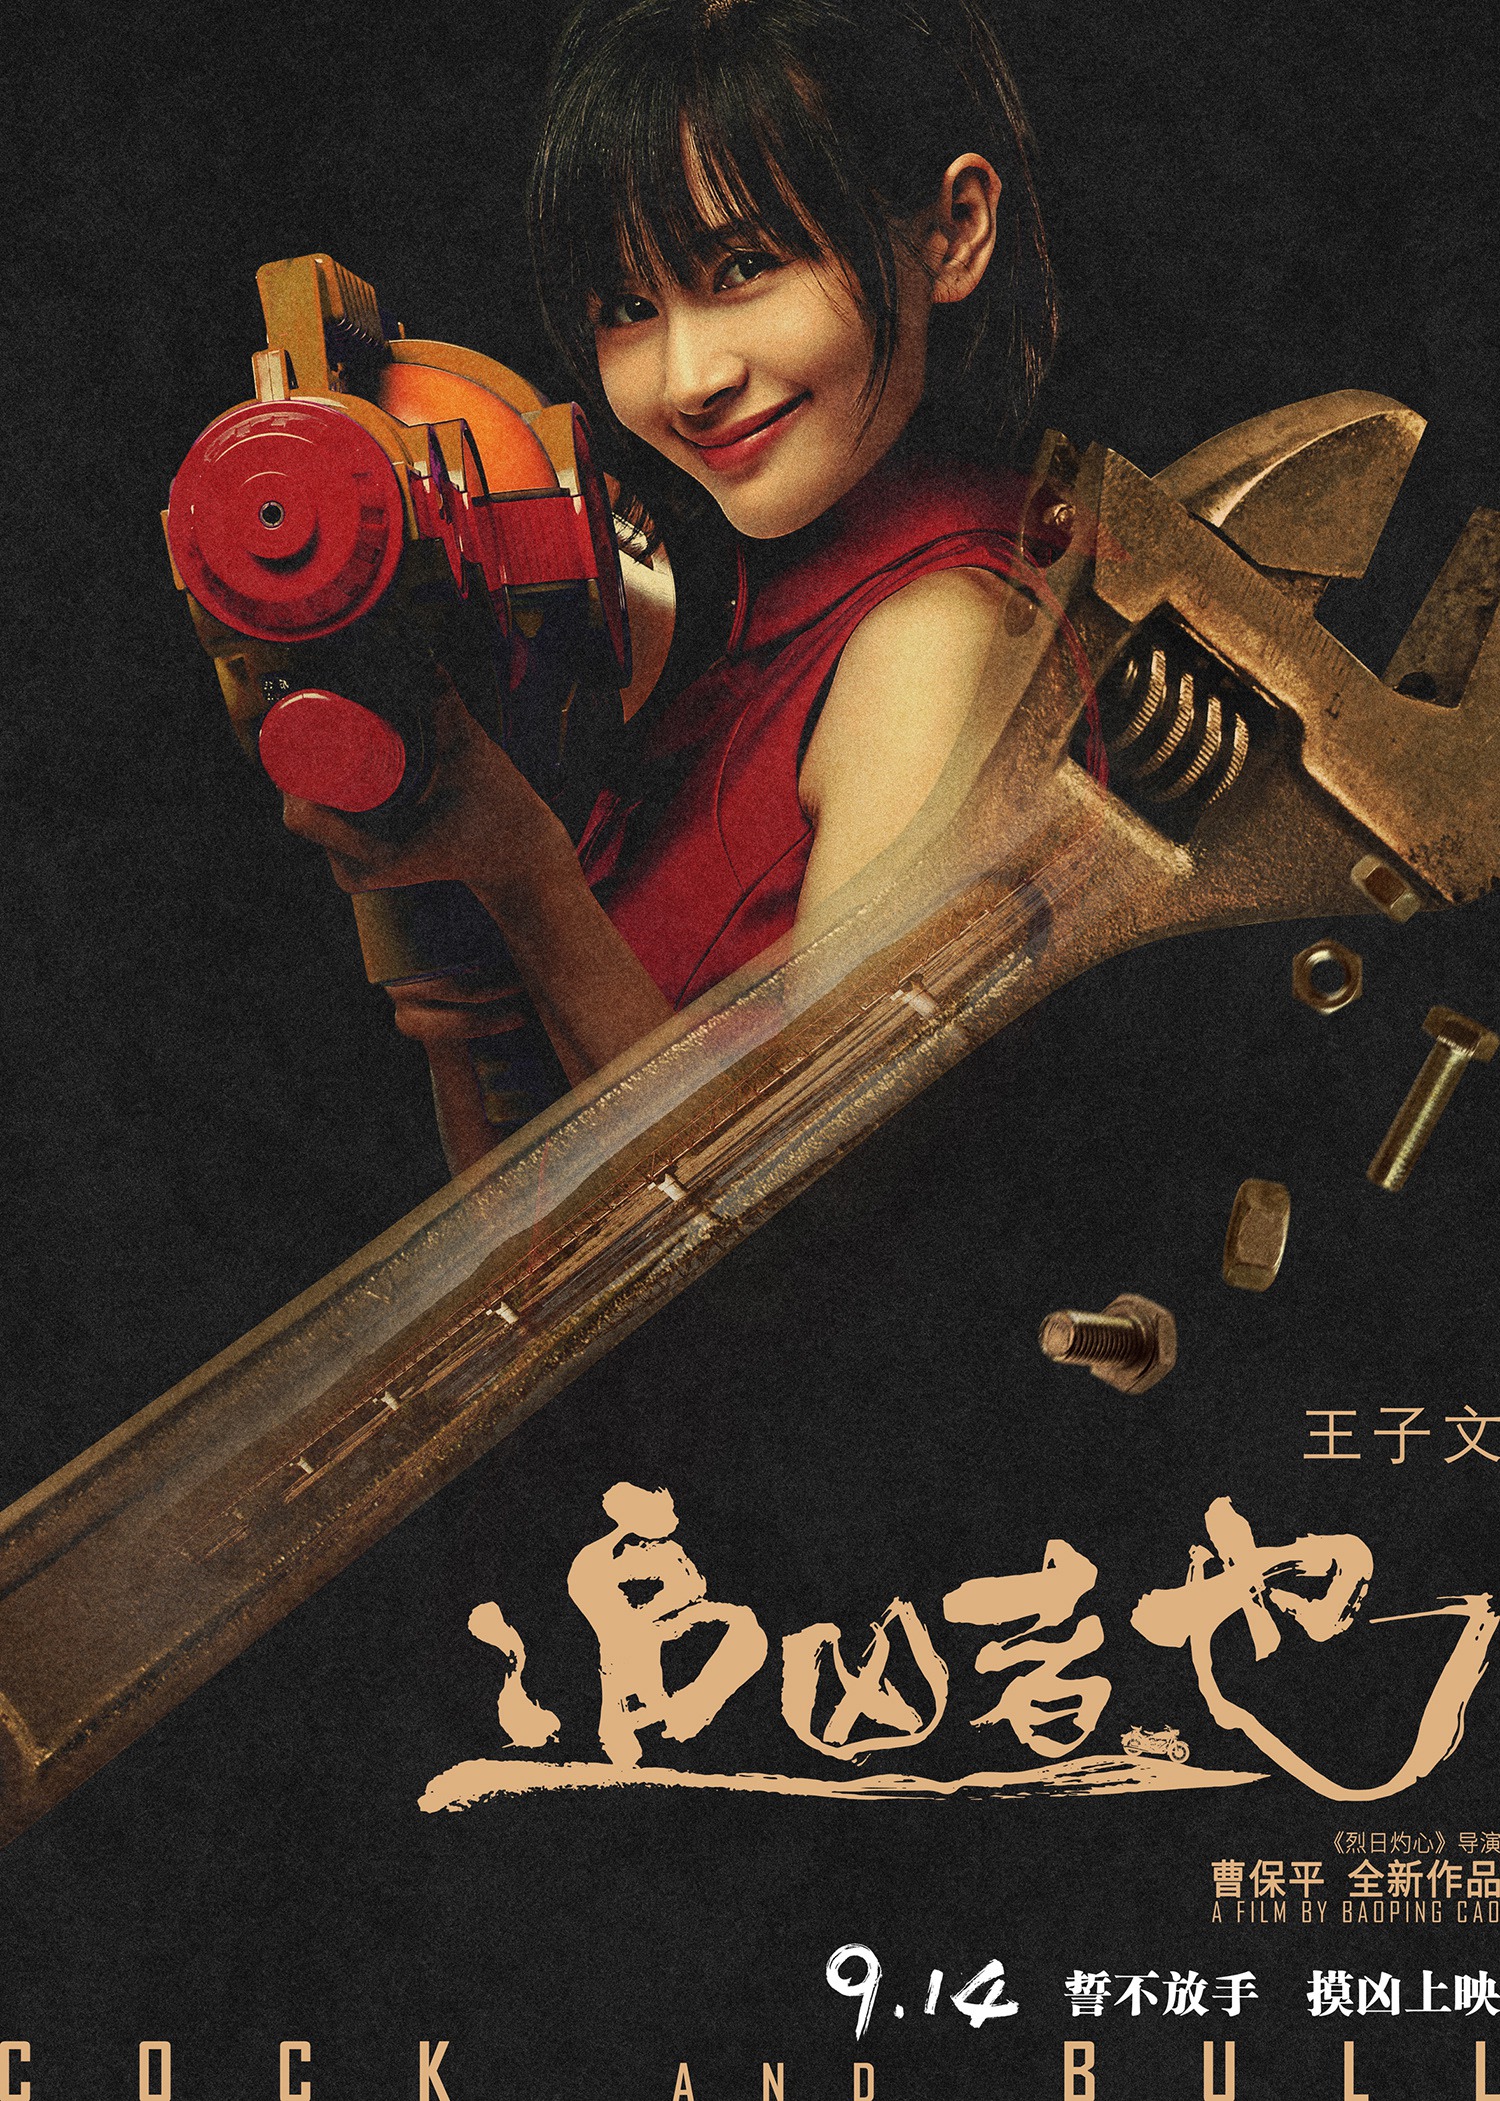 Mega Sized Movie Poster Image for Zhui xiong zhe ye (#11 of 16)